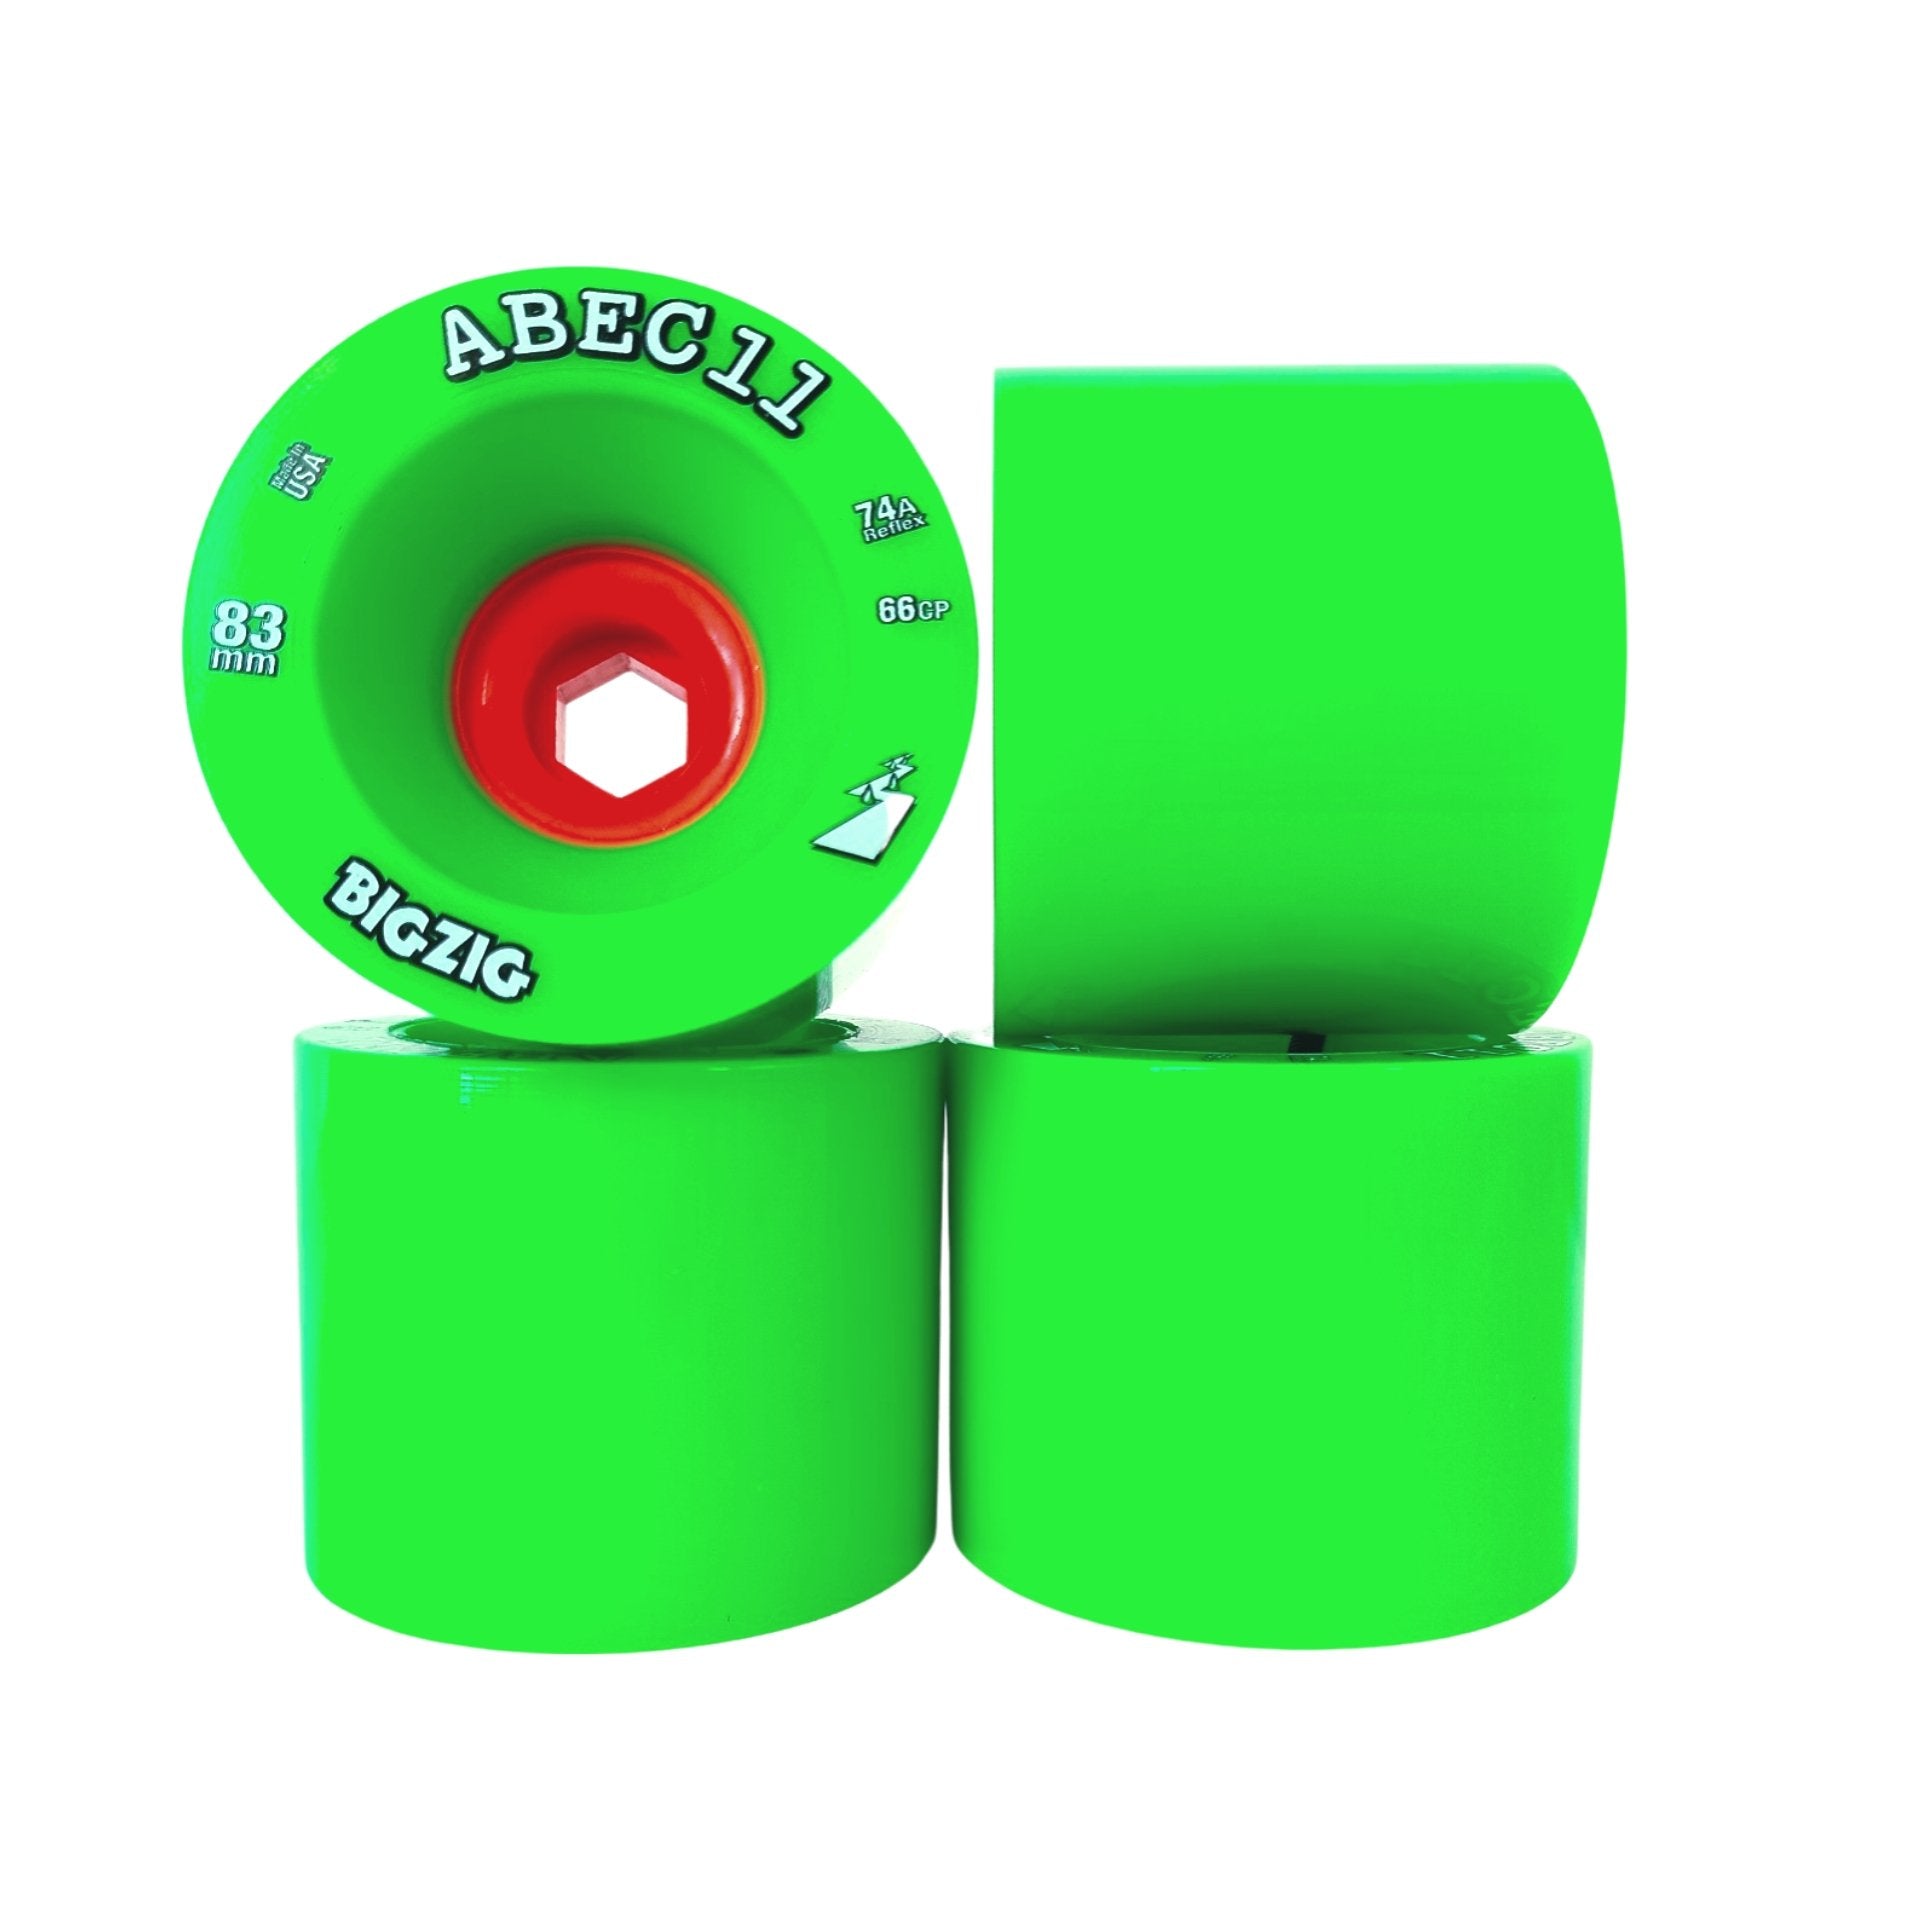 ABEC11: 83mm BigZig Longboard Skateboard Wheel - MUIRSKATE